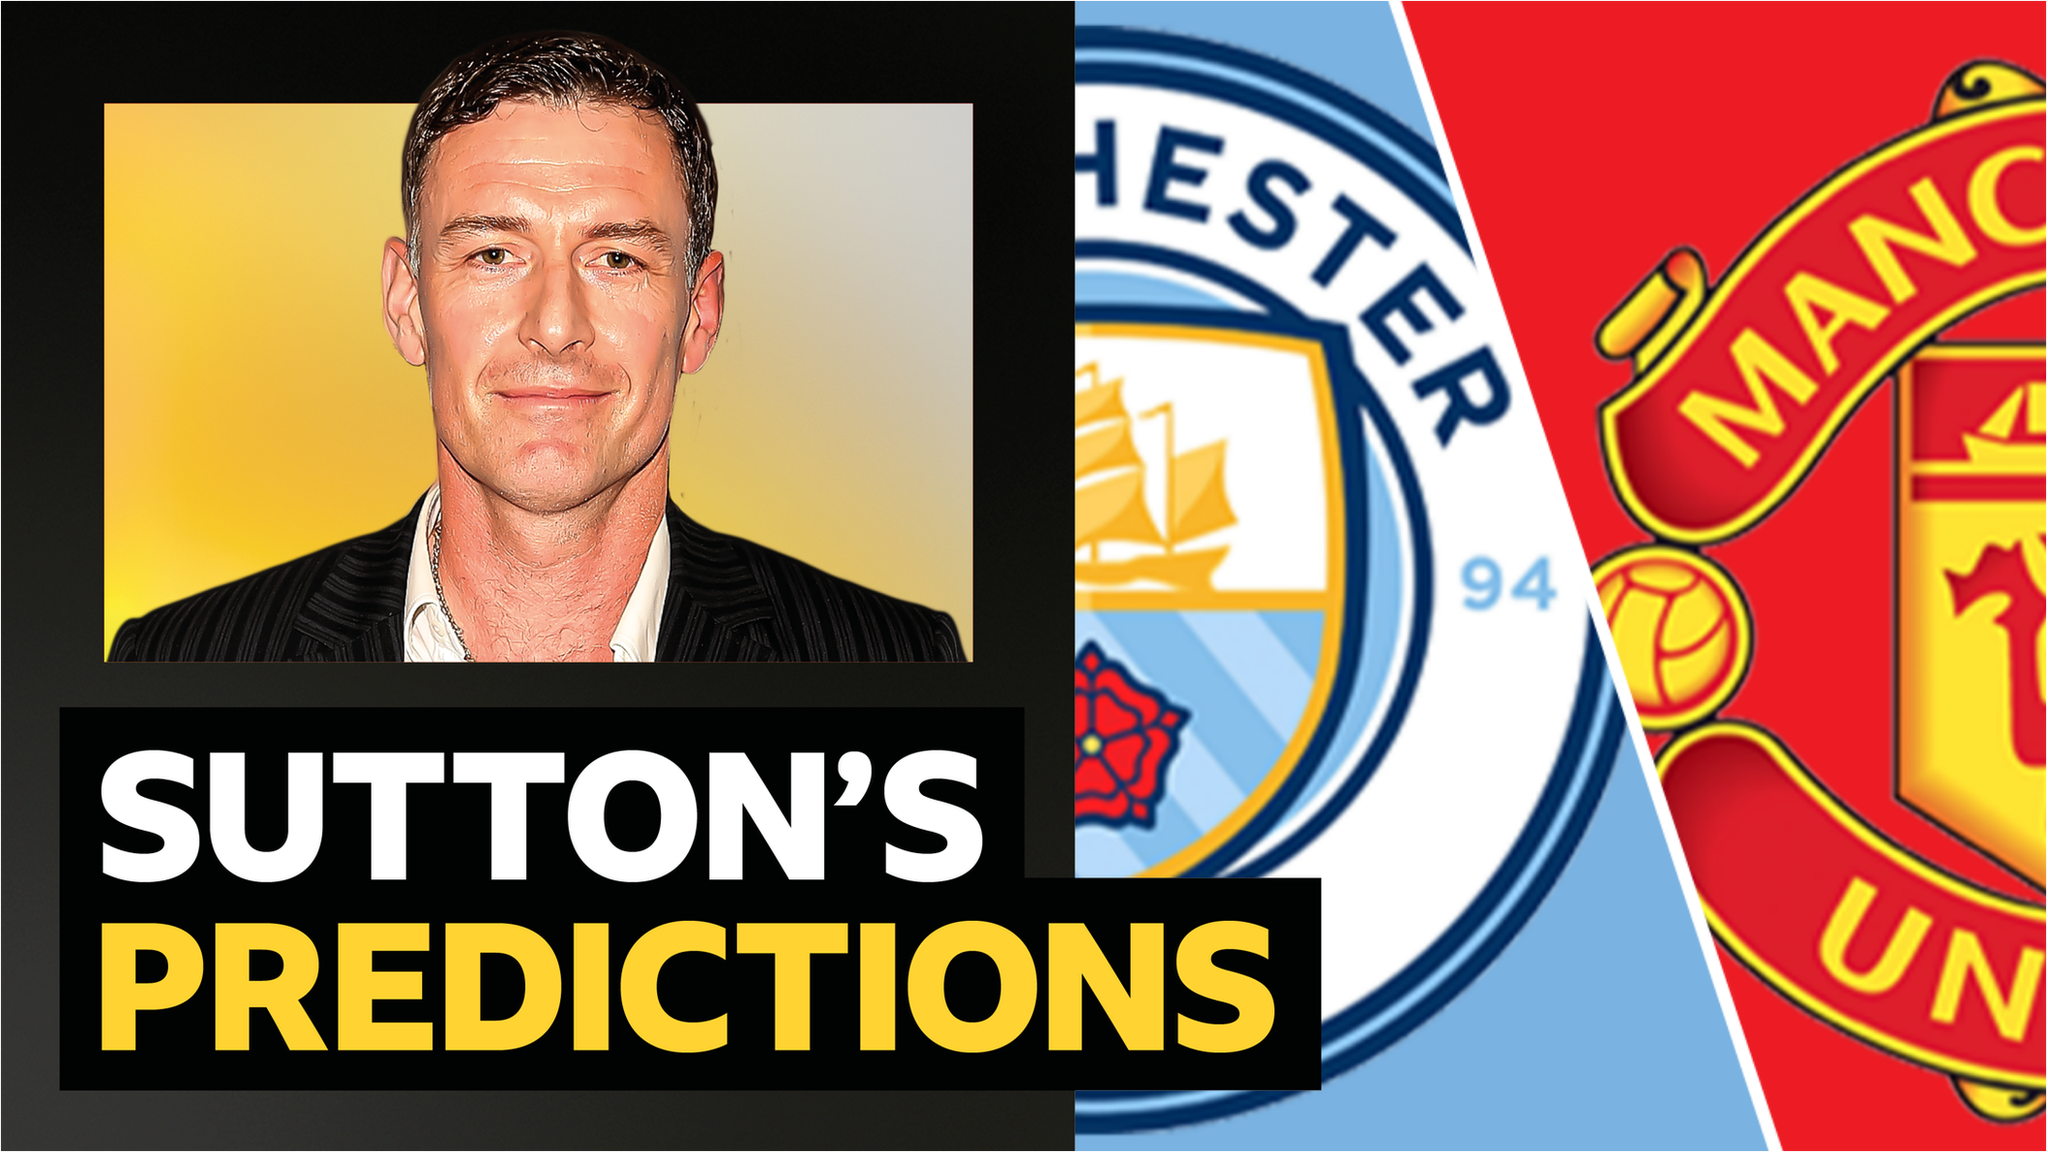 FA Cup final predictions: Chris Sutton v celebrity fans of Man City & Man Utd